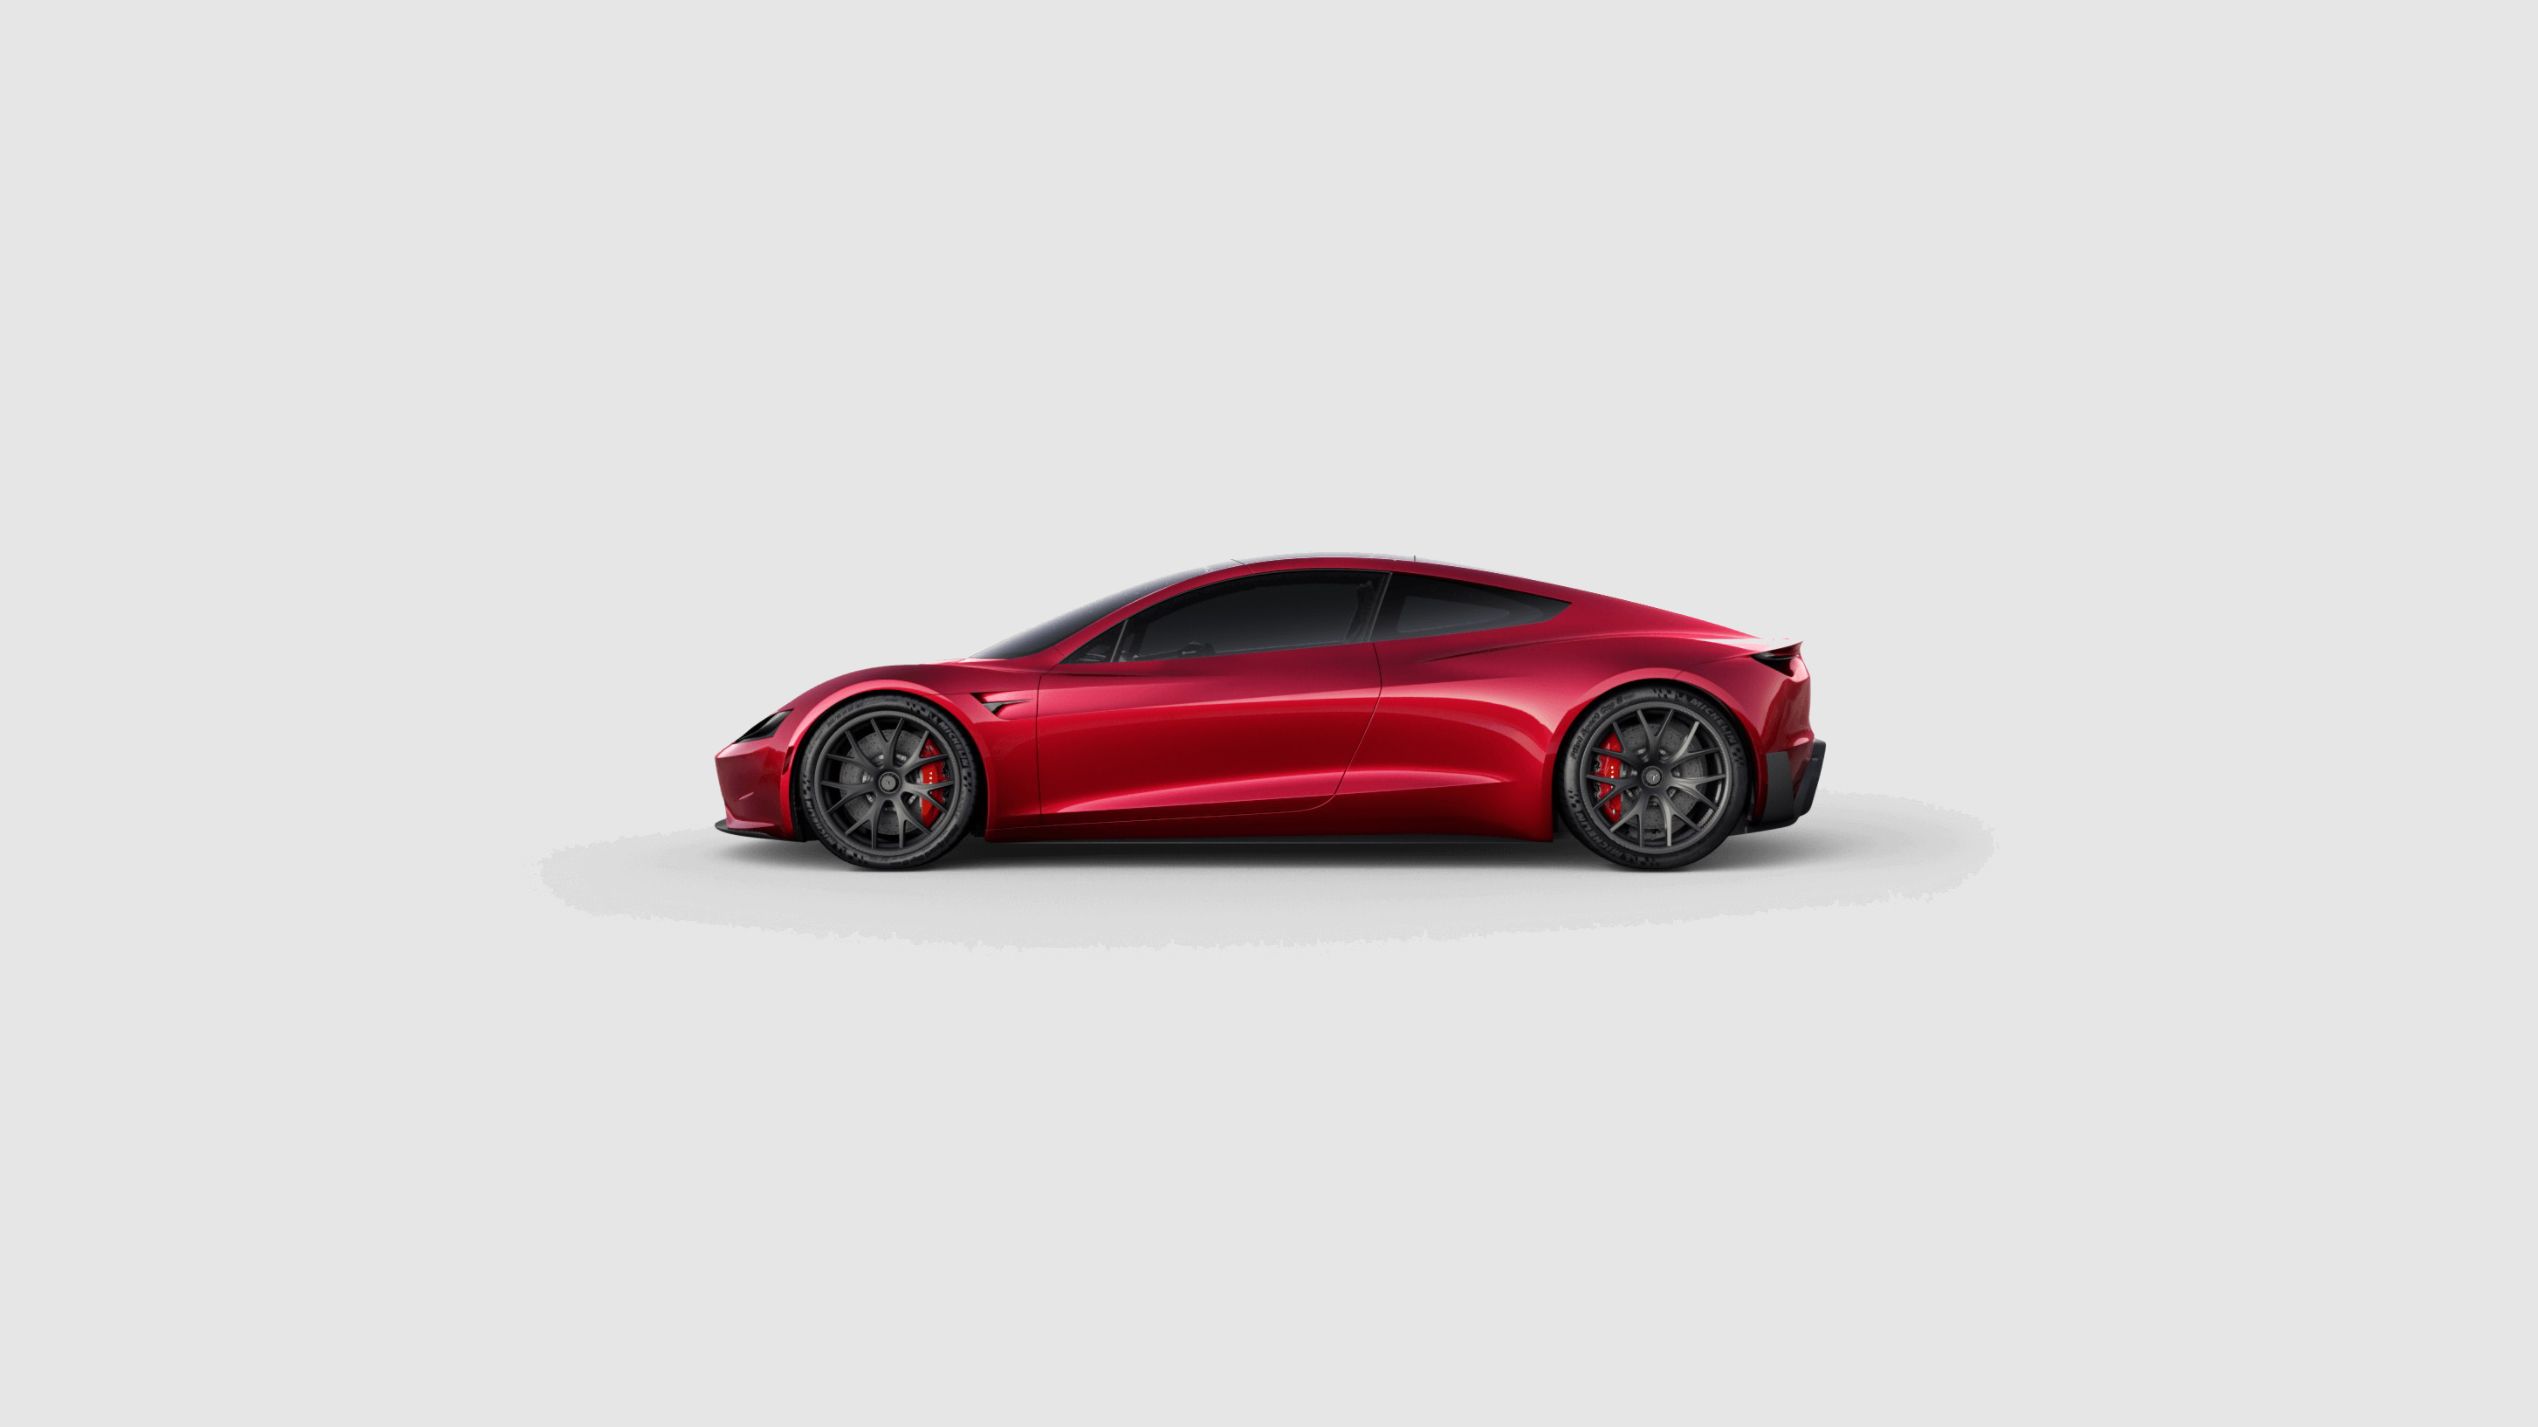 34 Top Photos Tesla Sports Car 2021 / 2021 Tesla Roadster What We Know So Far